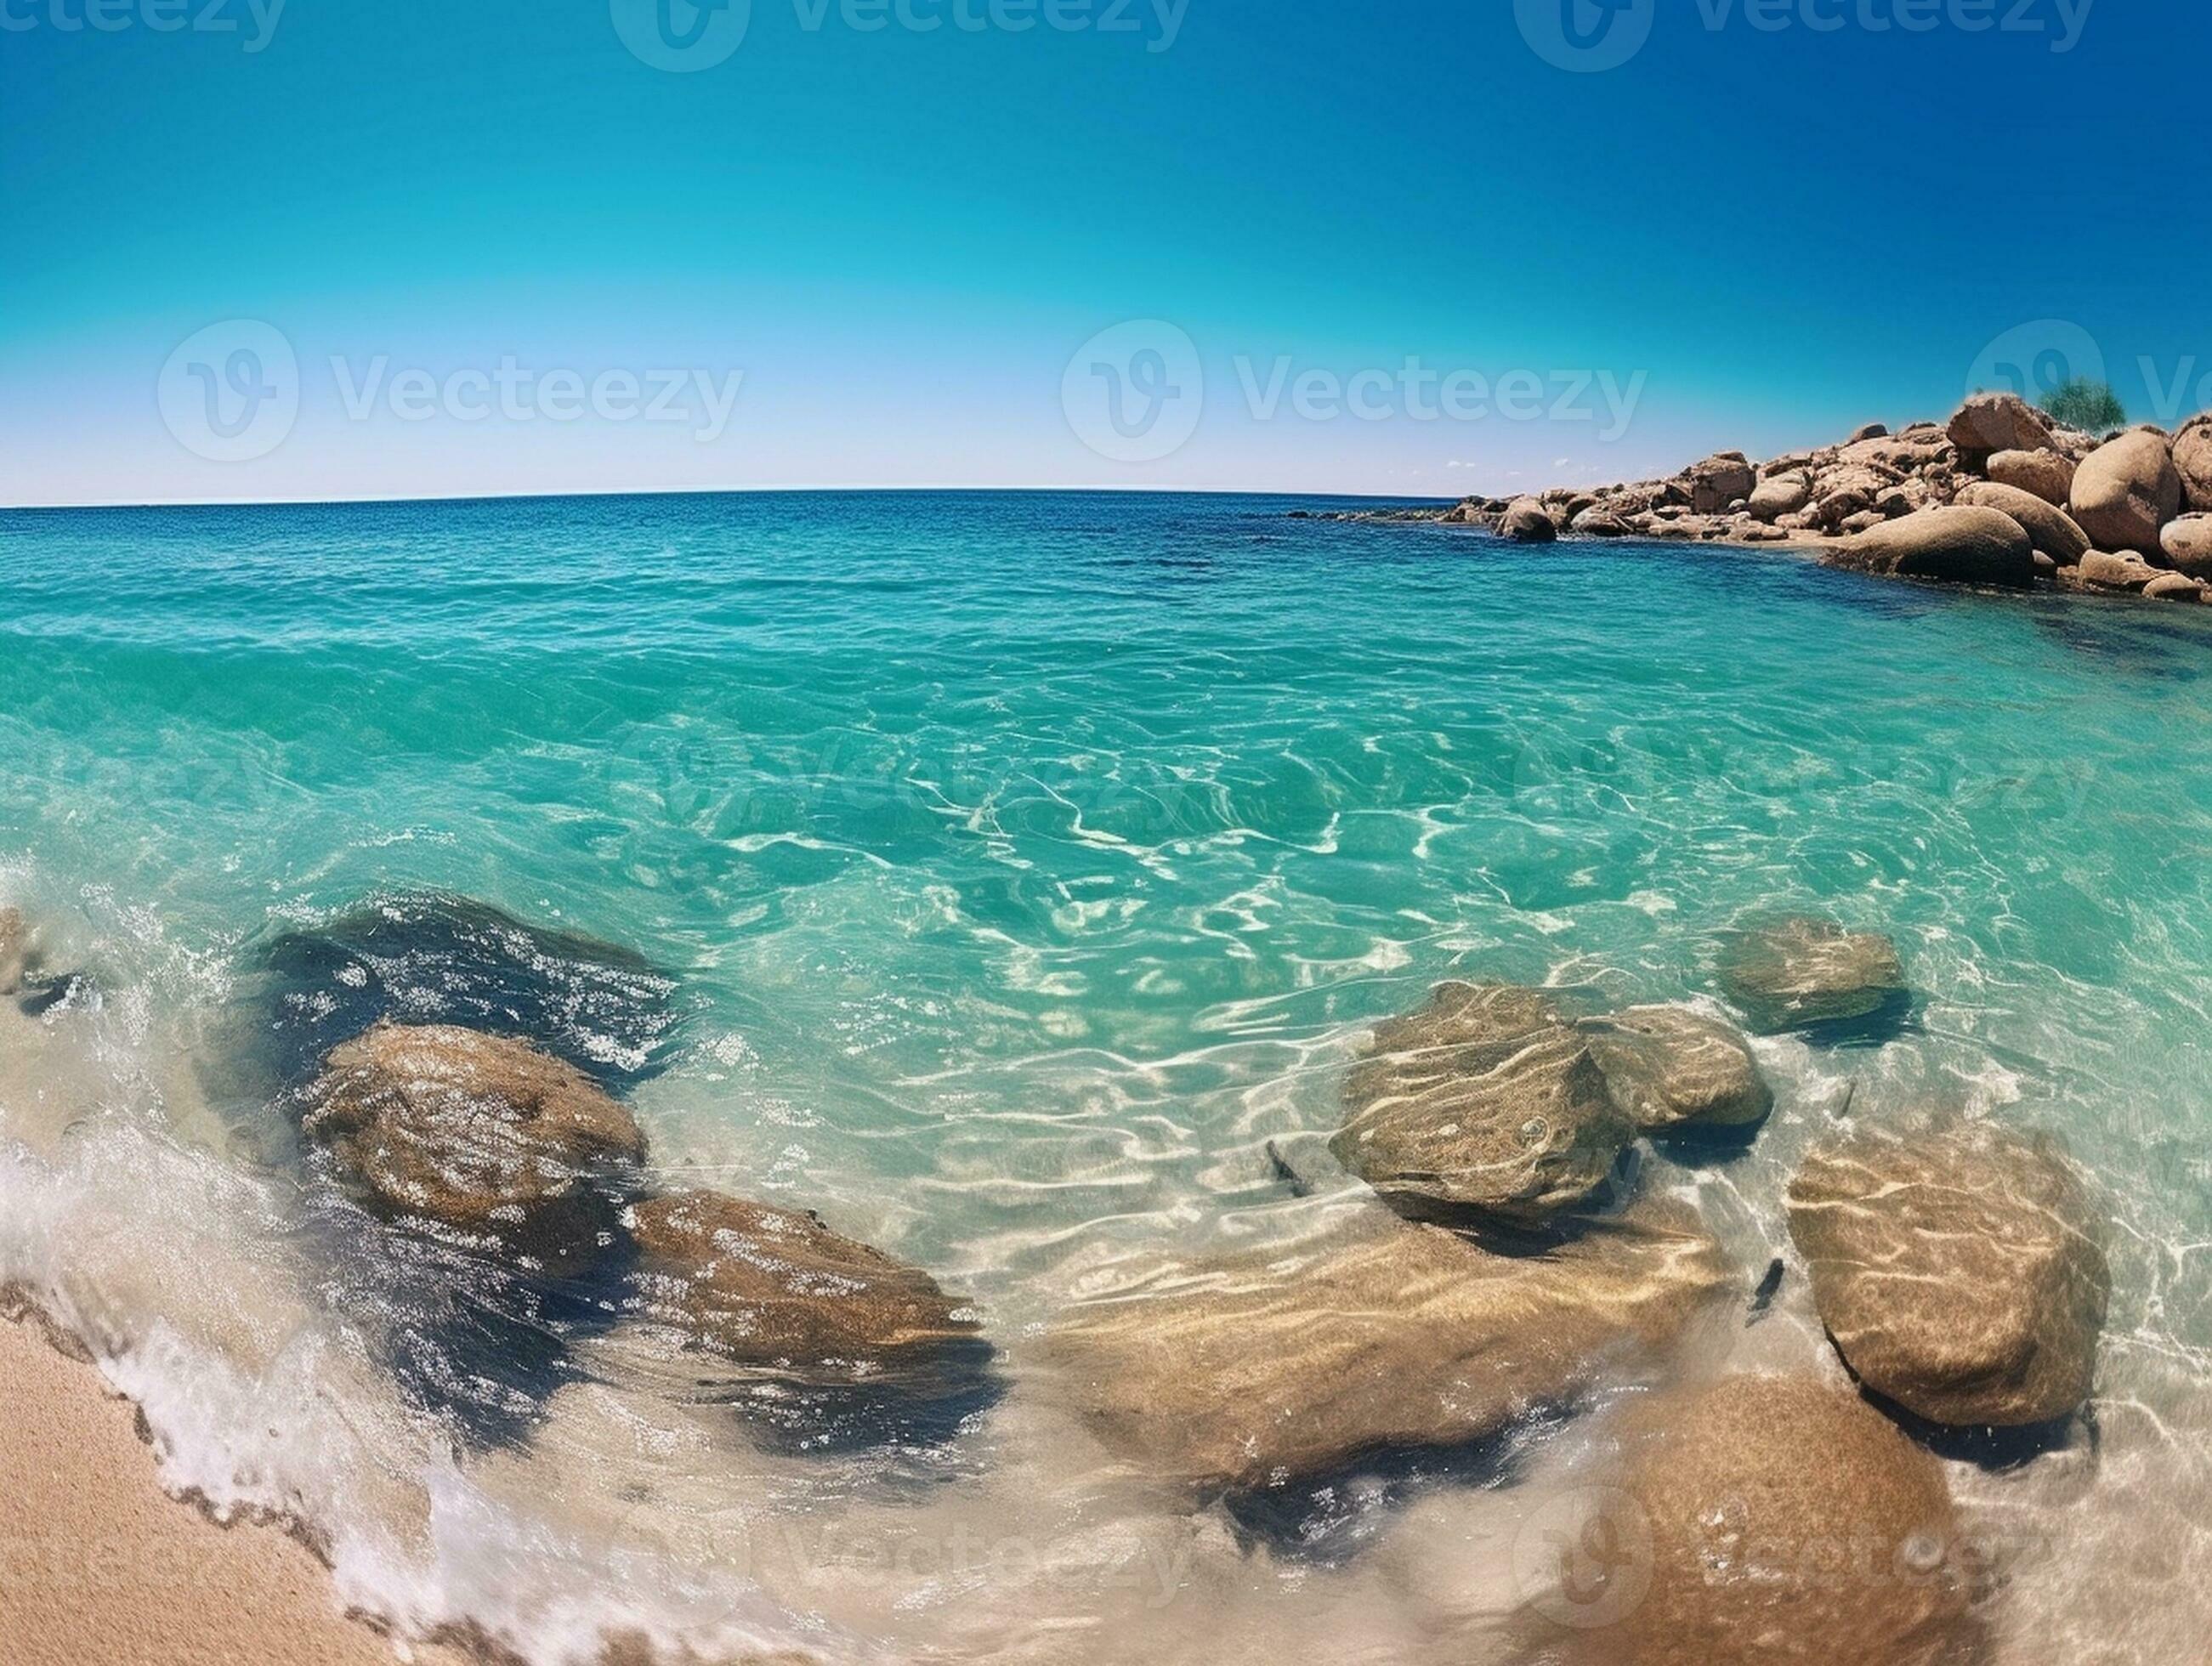 Beautiful landscape of Mediterranean Sea, rocks and islands in the